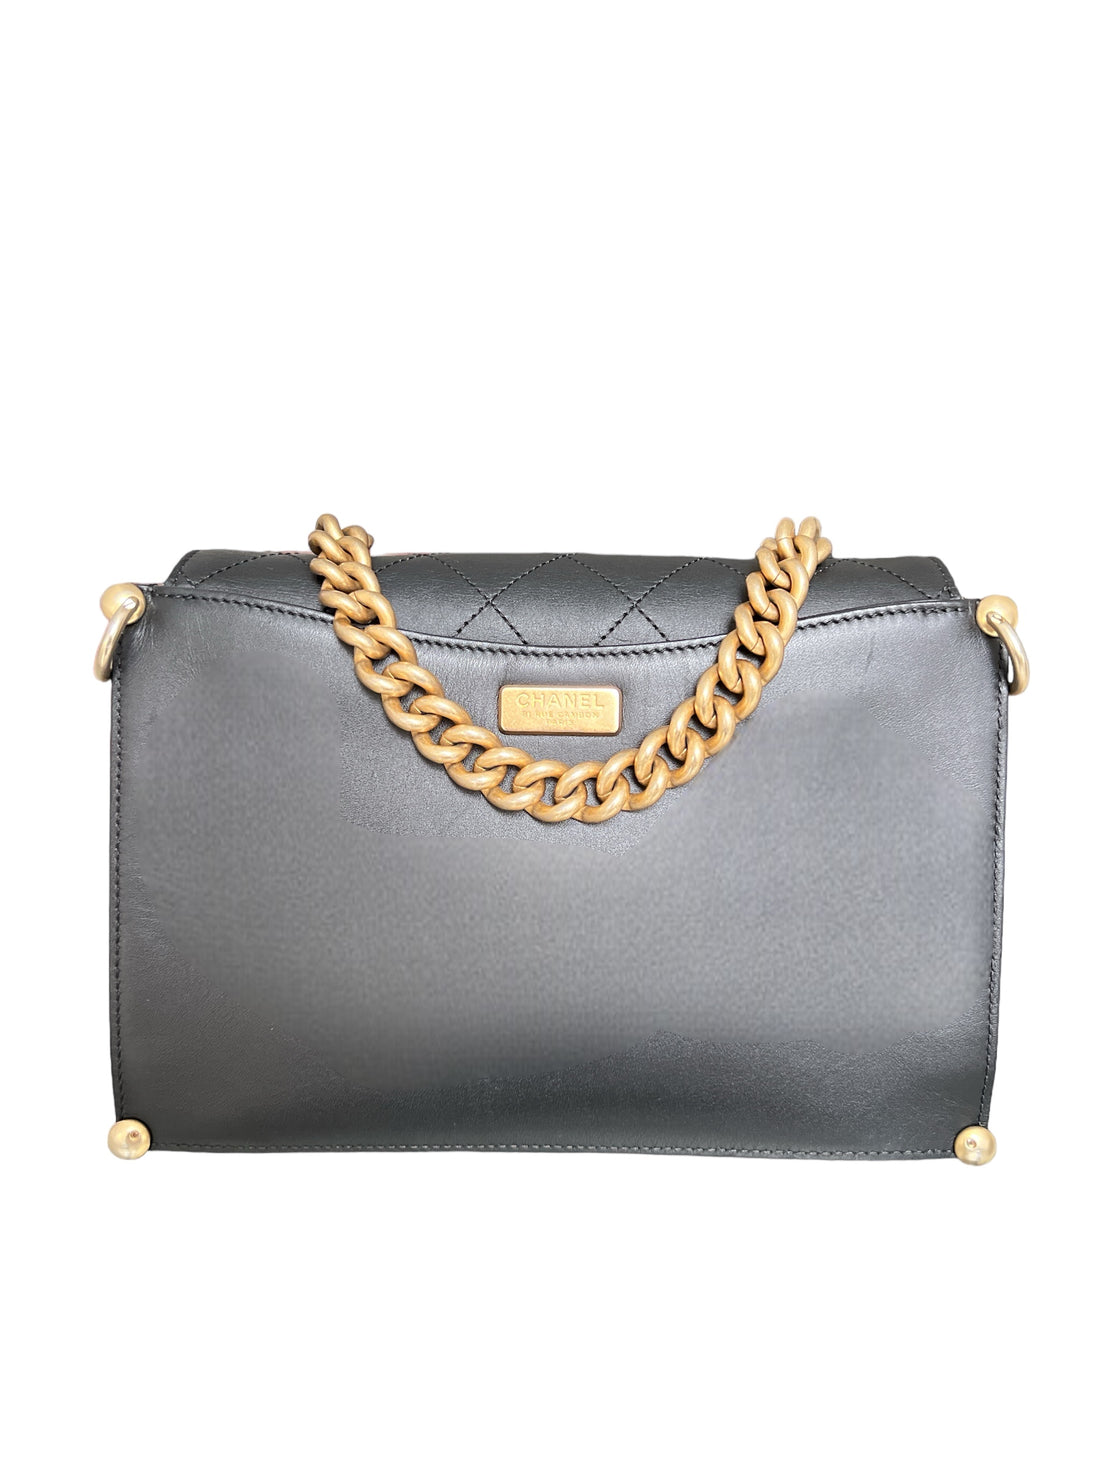 Chanel Classic Flap Bag aus schwarzem Kalbsleder